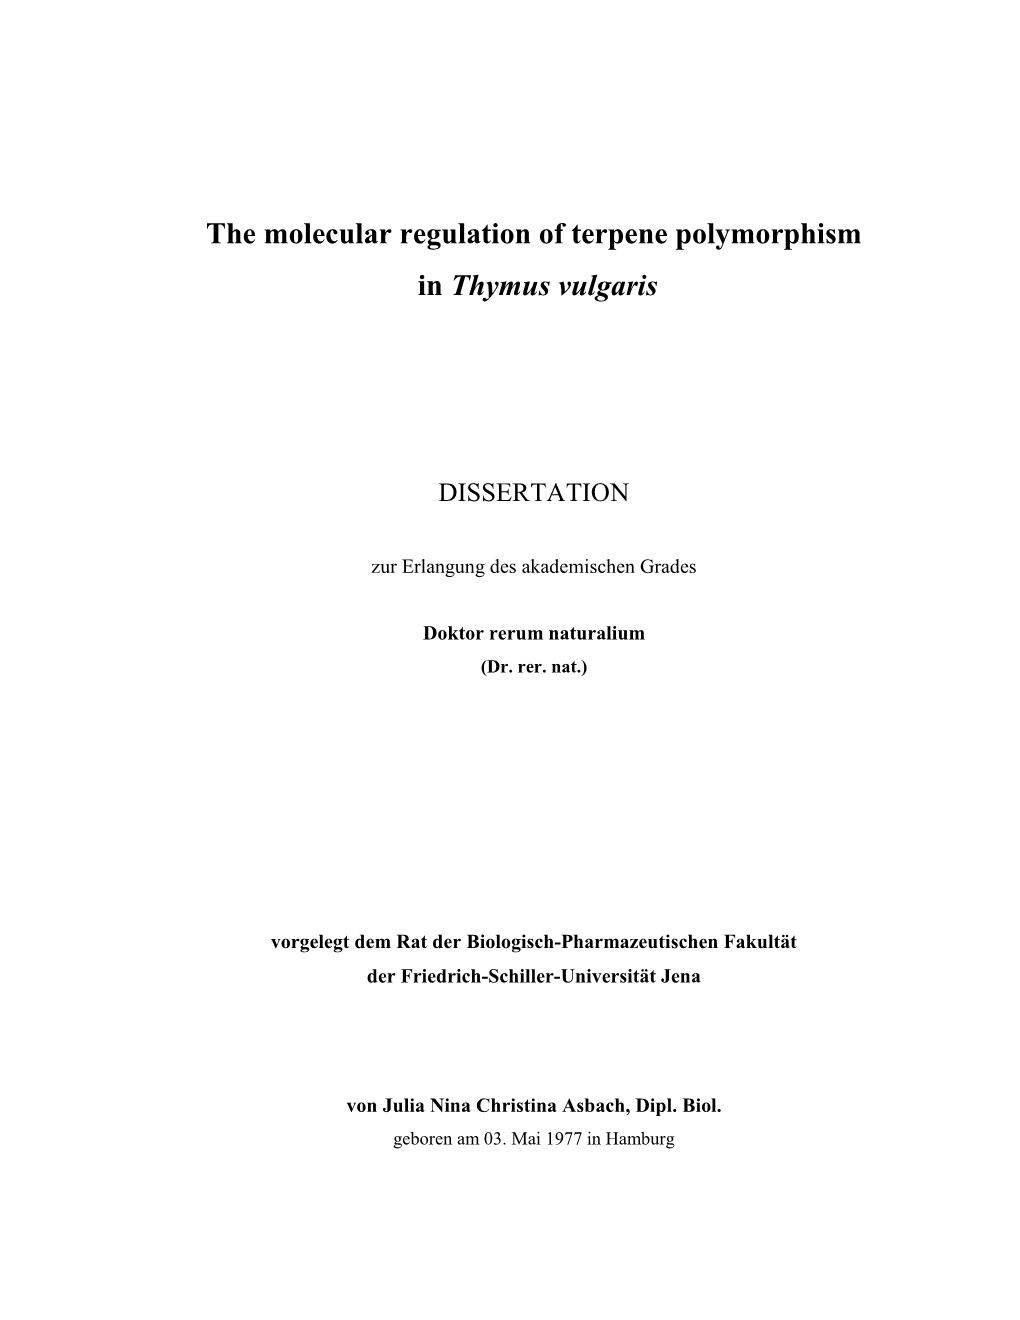 The Molecular Regulation of Terpene Polymorphism in Thymus Vulgaris